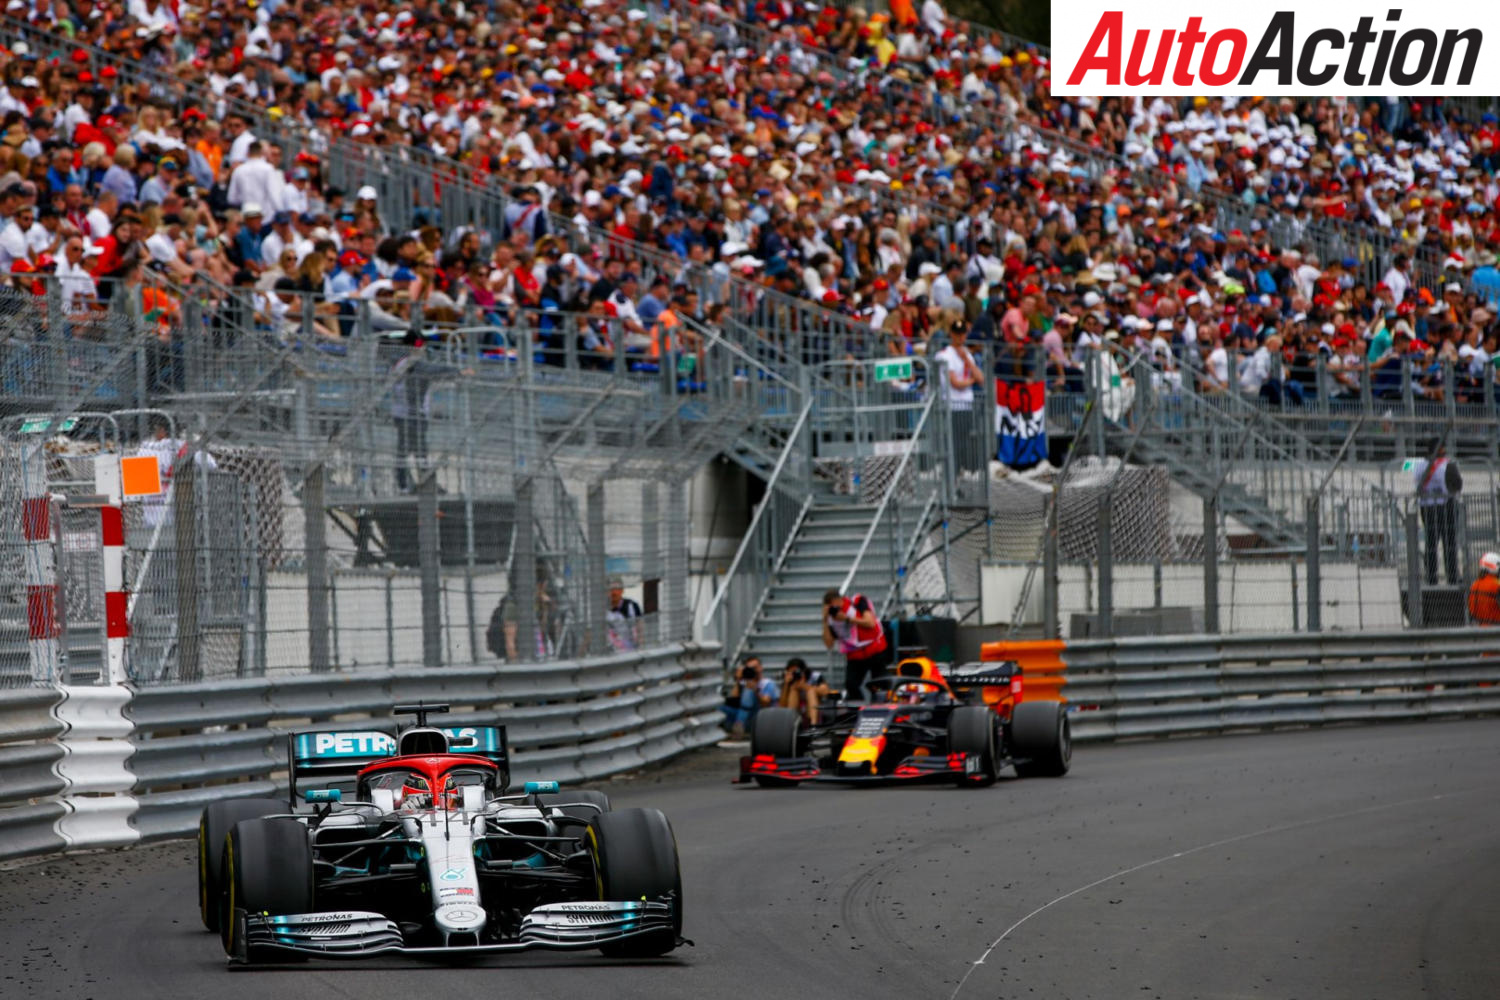 Lewis Hamilton held off Max Verstappen to win the Monaco Grand Prix - Photo: LAT